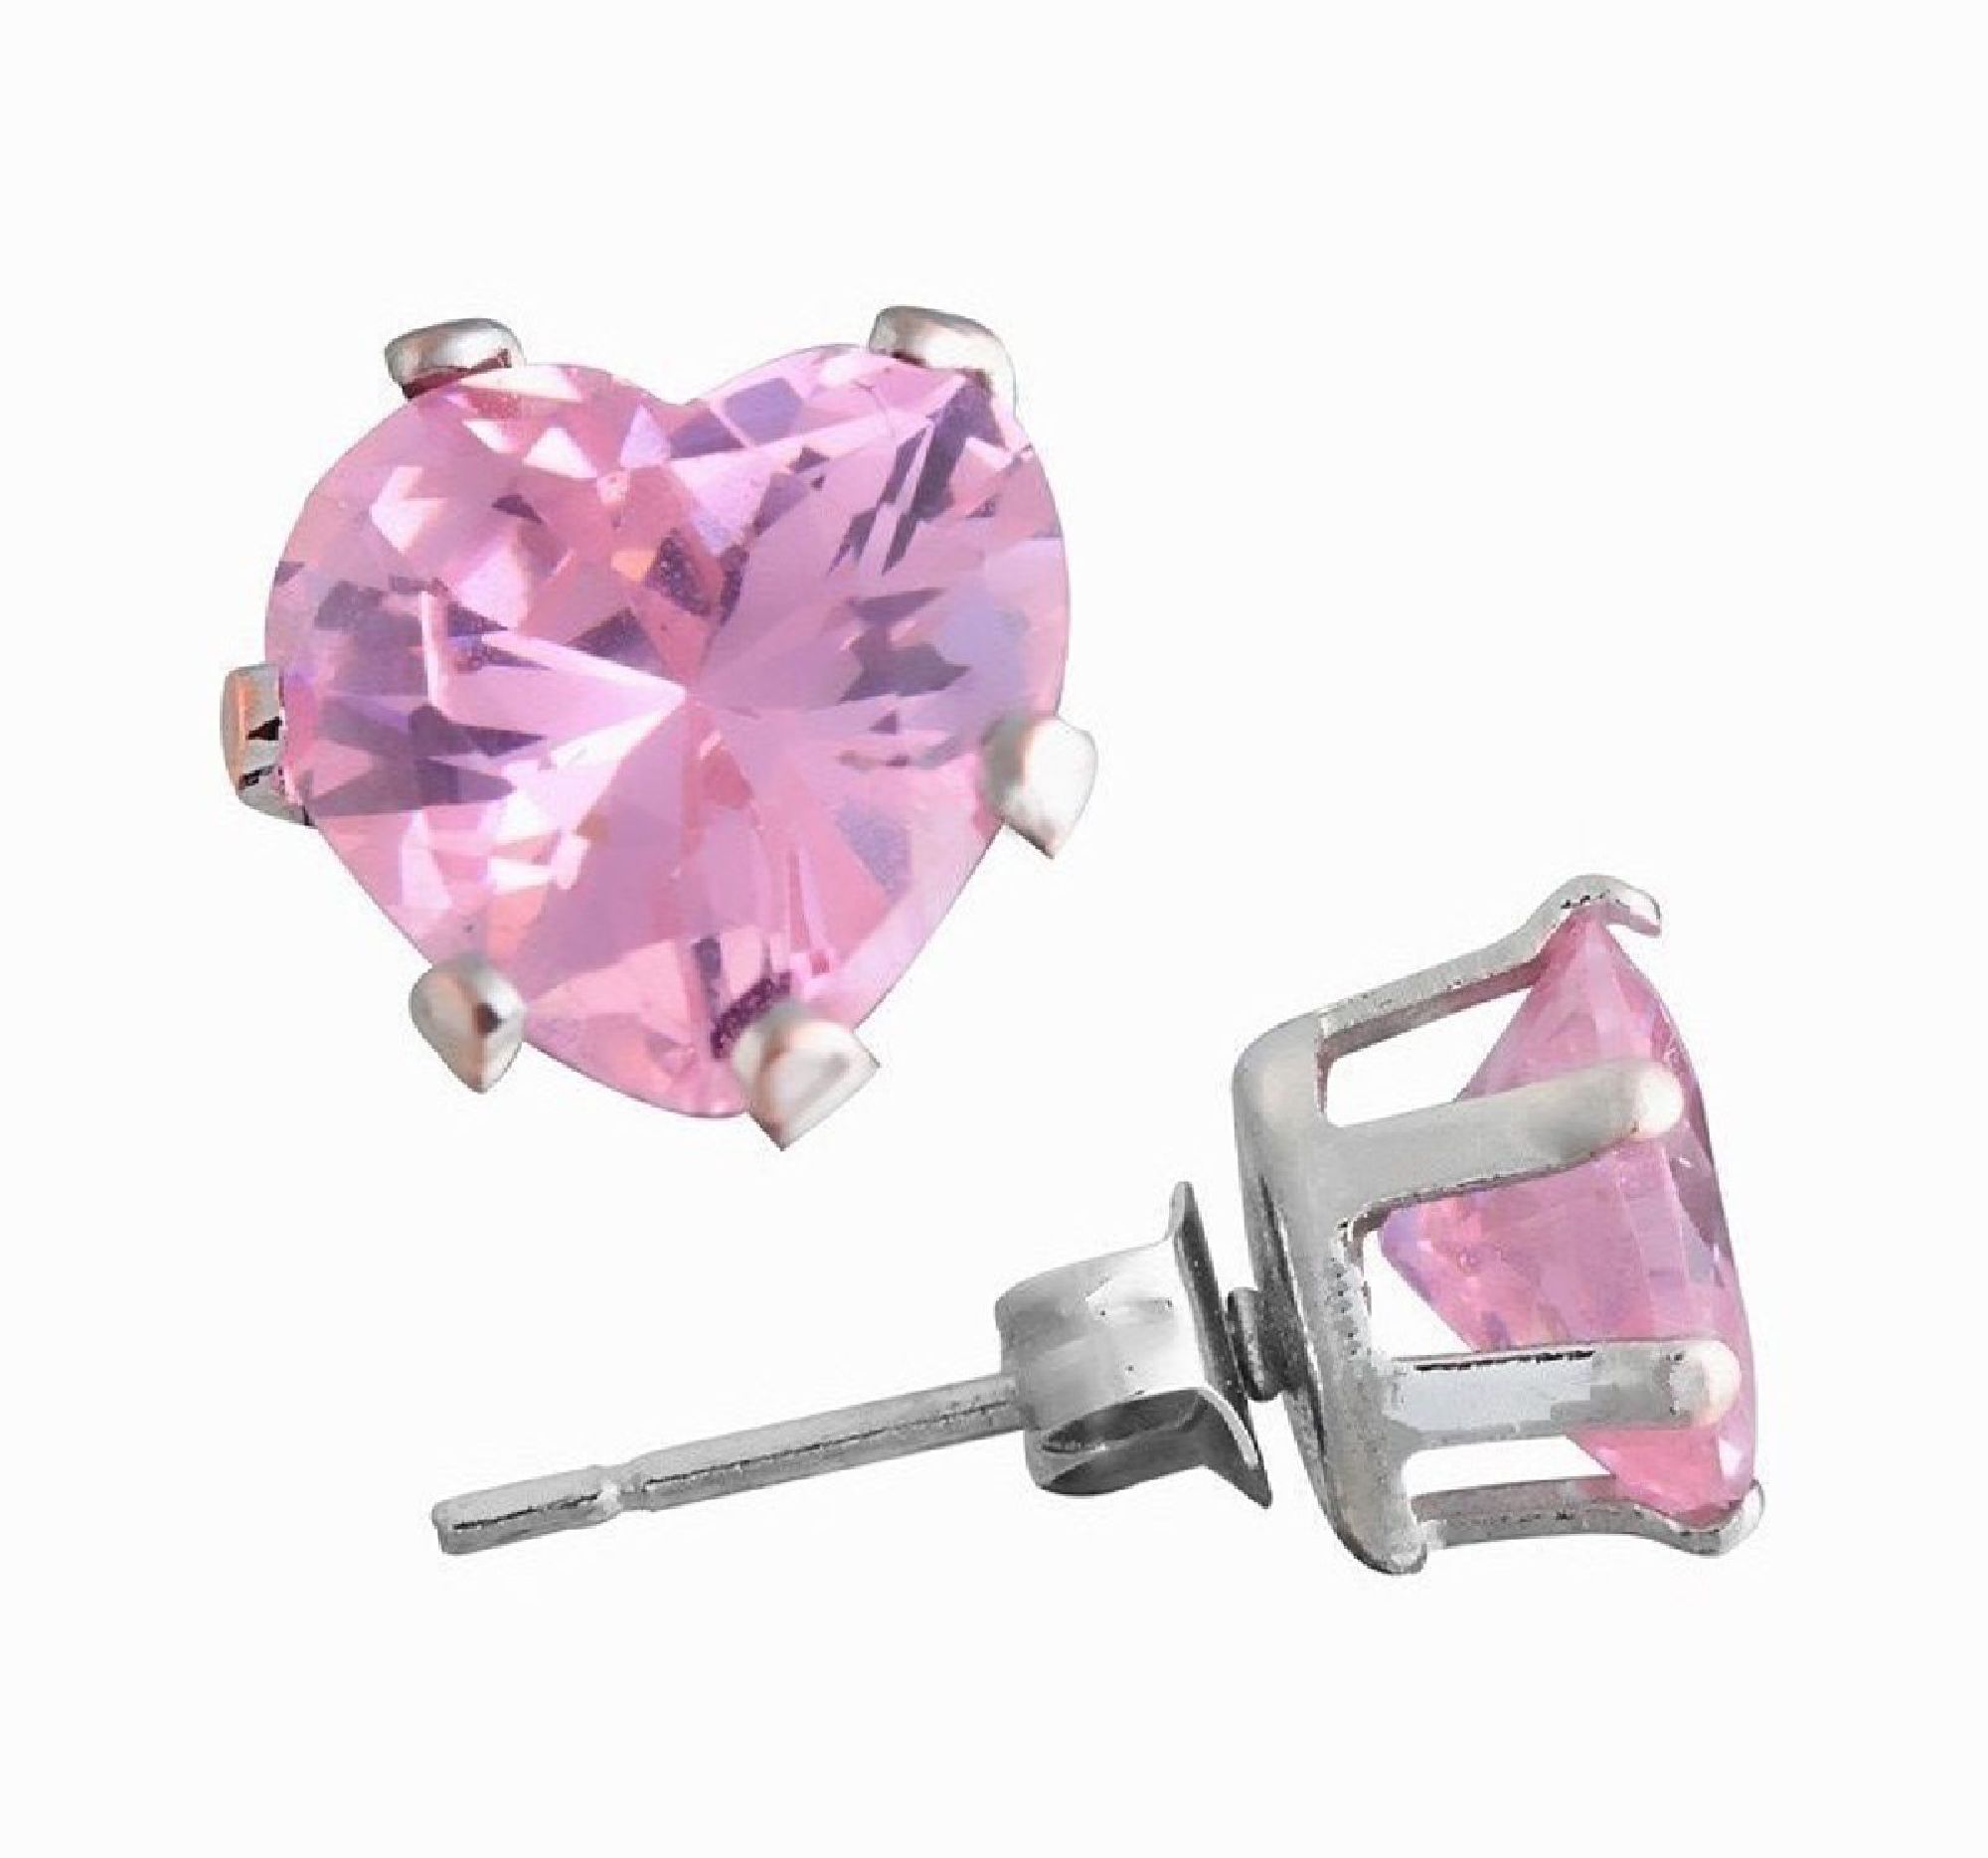 2 Carat Heart Shape Pink Diamond manmade Stud Earrings for Men in 14k White Gold over Sterling Silver Designed in France